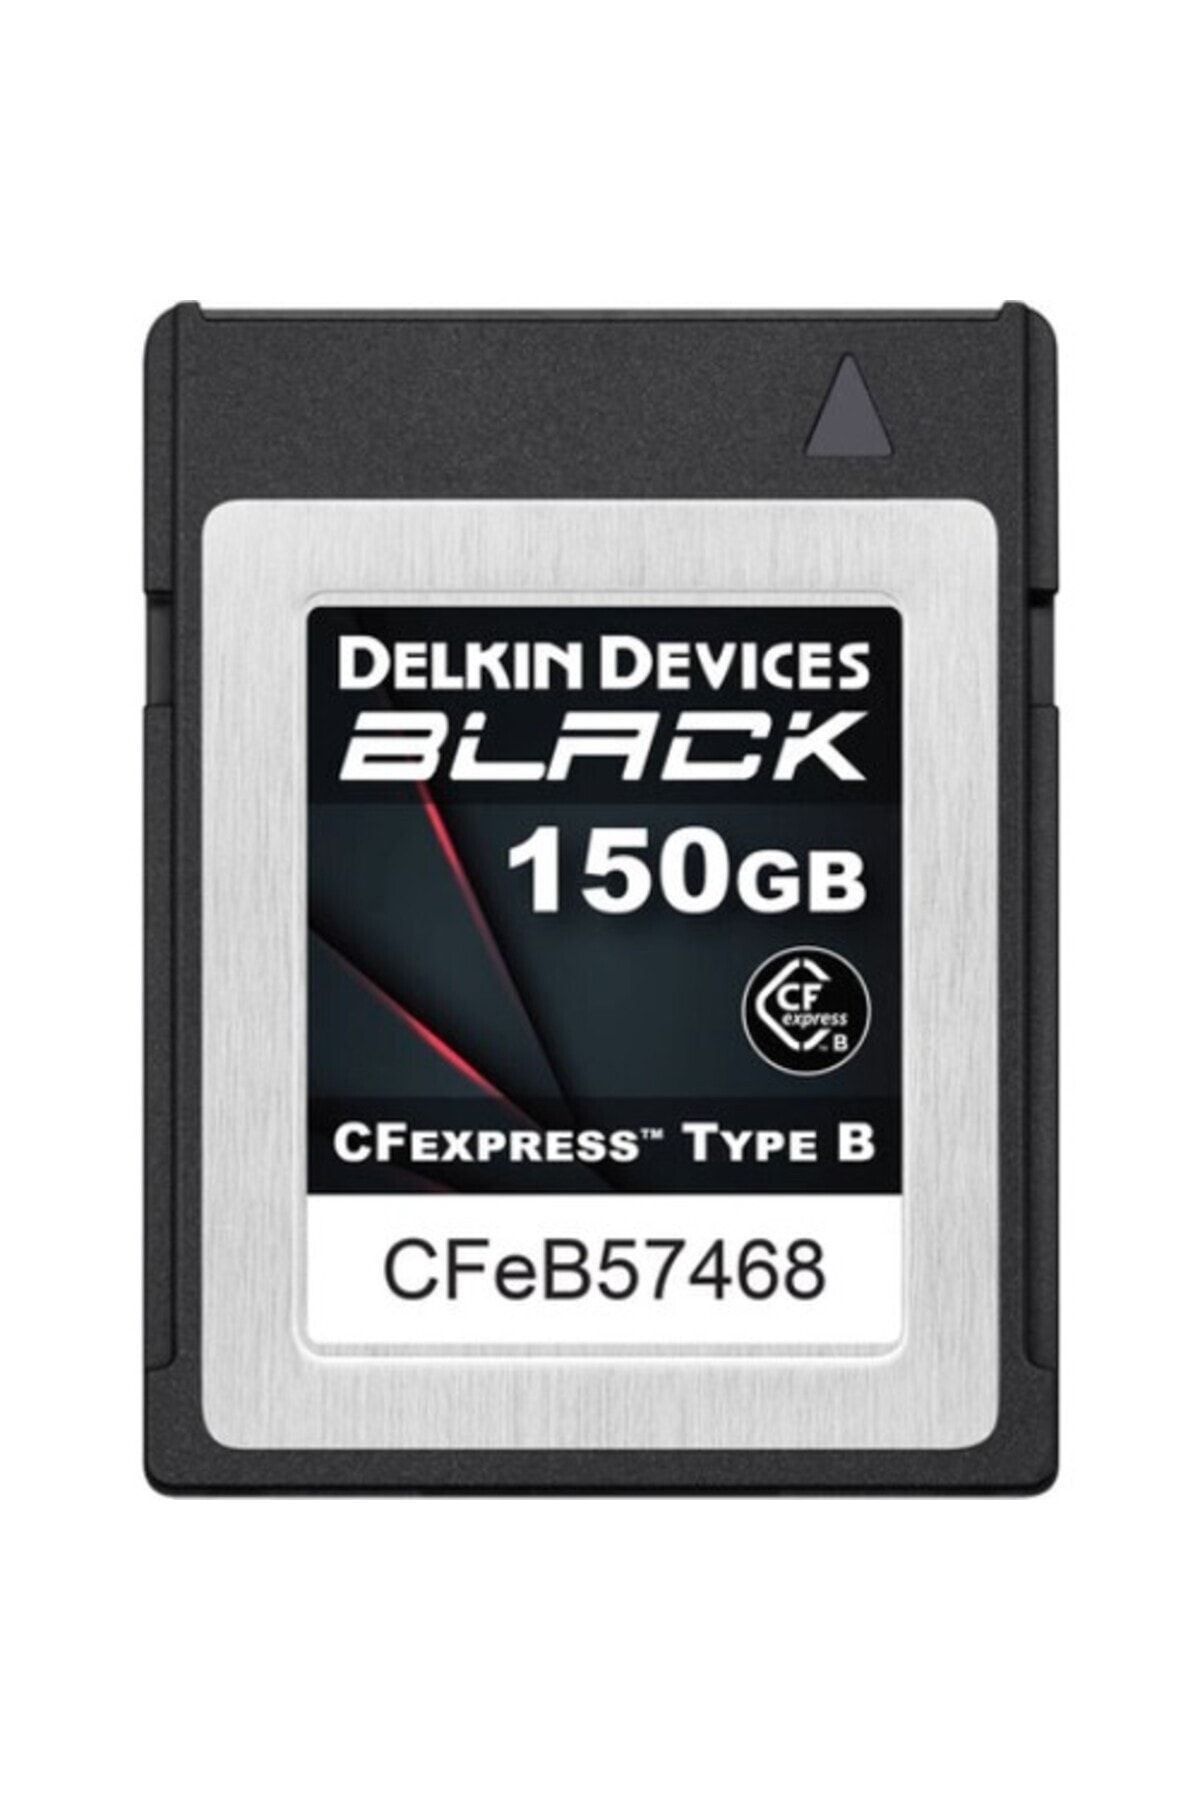 Delkin 150GB Black Cfexpress™ Type B Hafıza Kartı